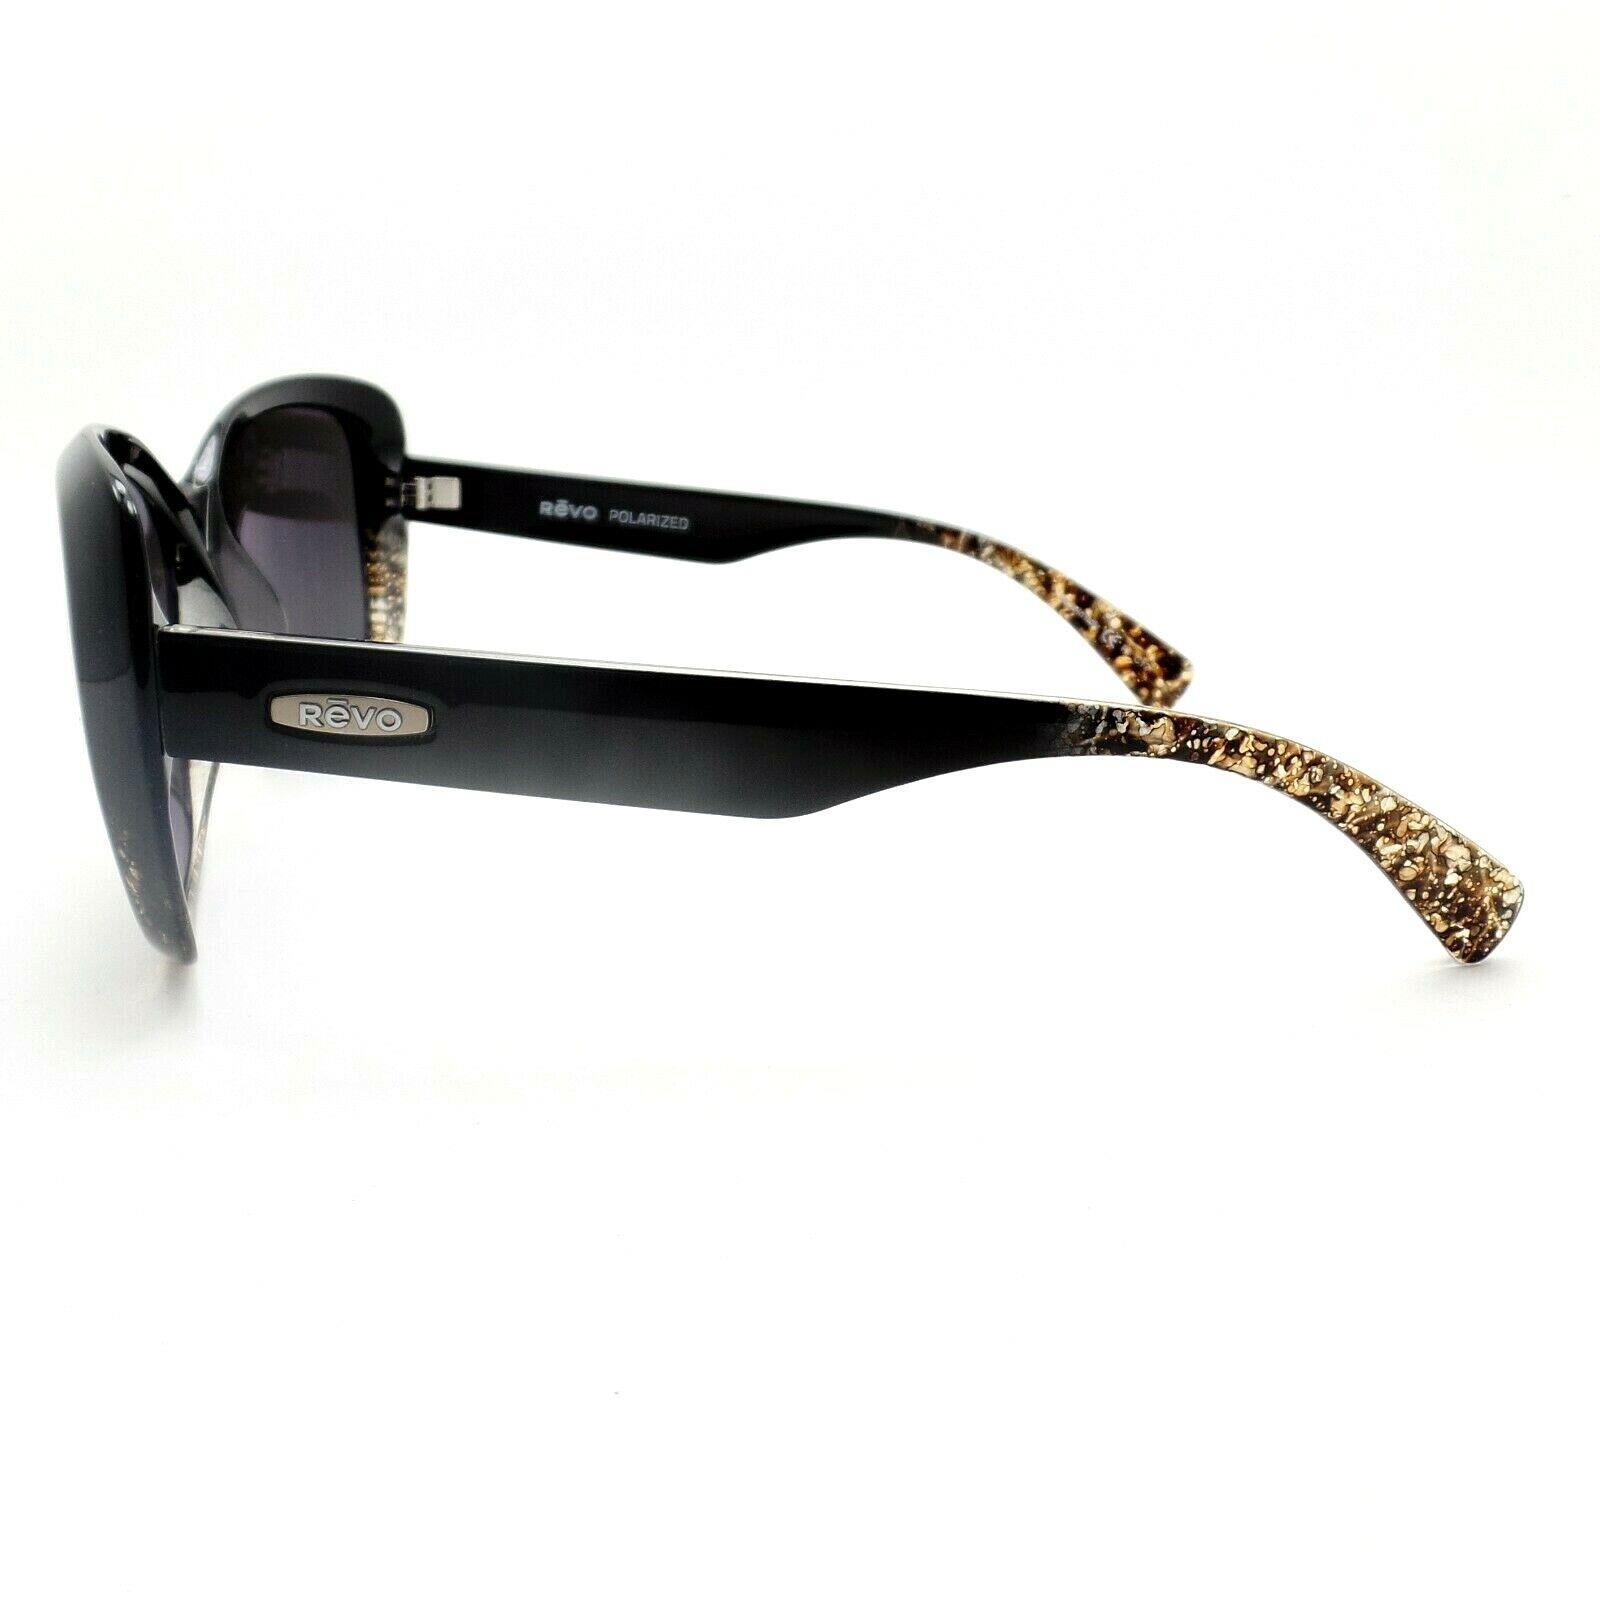 Revo sunglasses Black Amber - Black Amber Frame